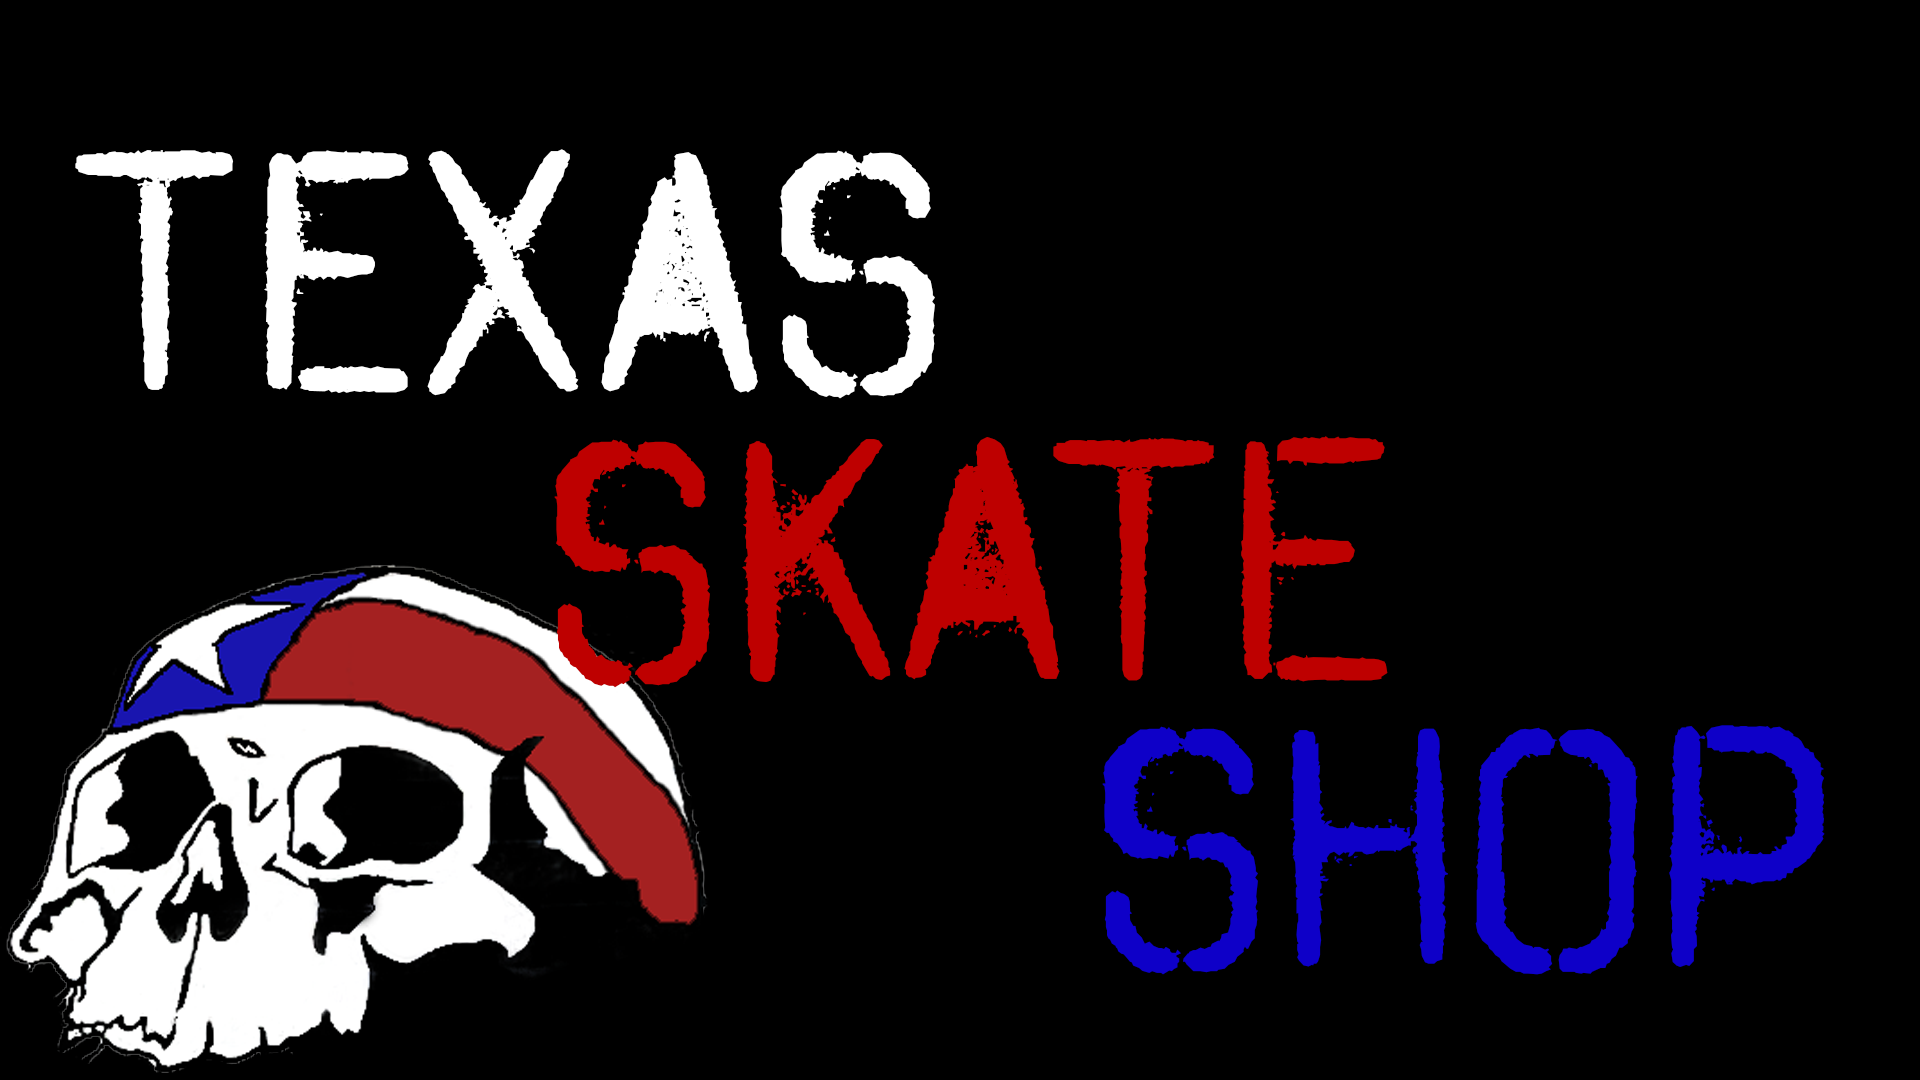 Texas Skate Shop